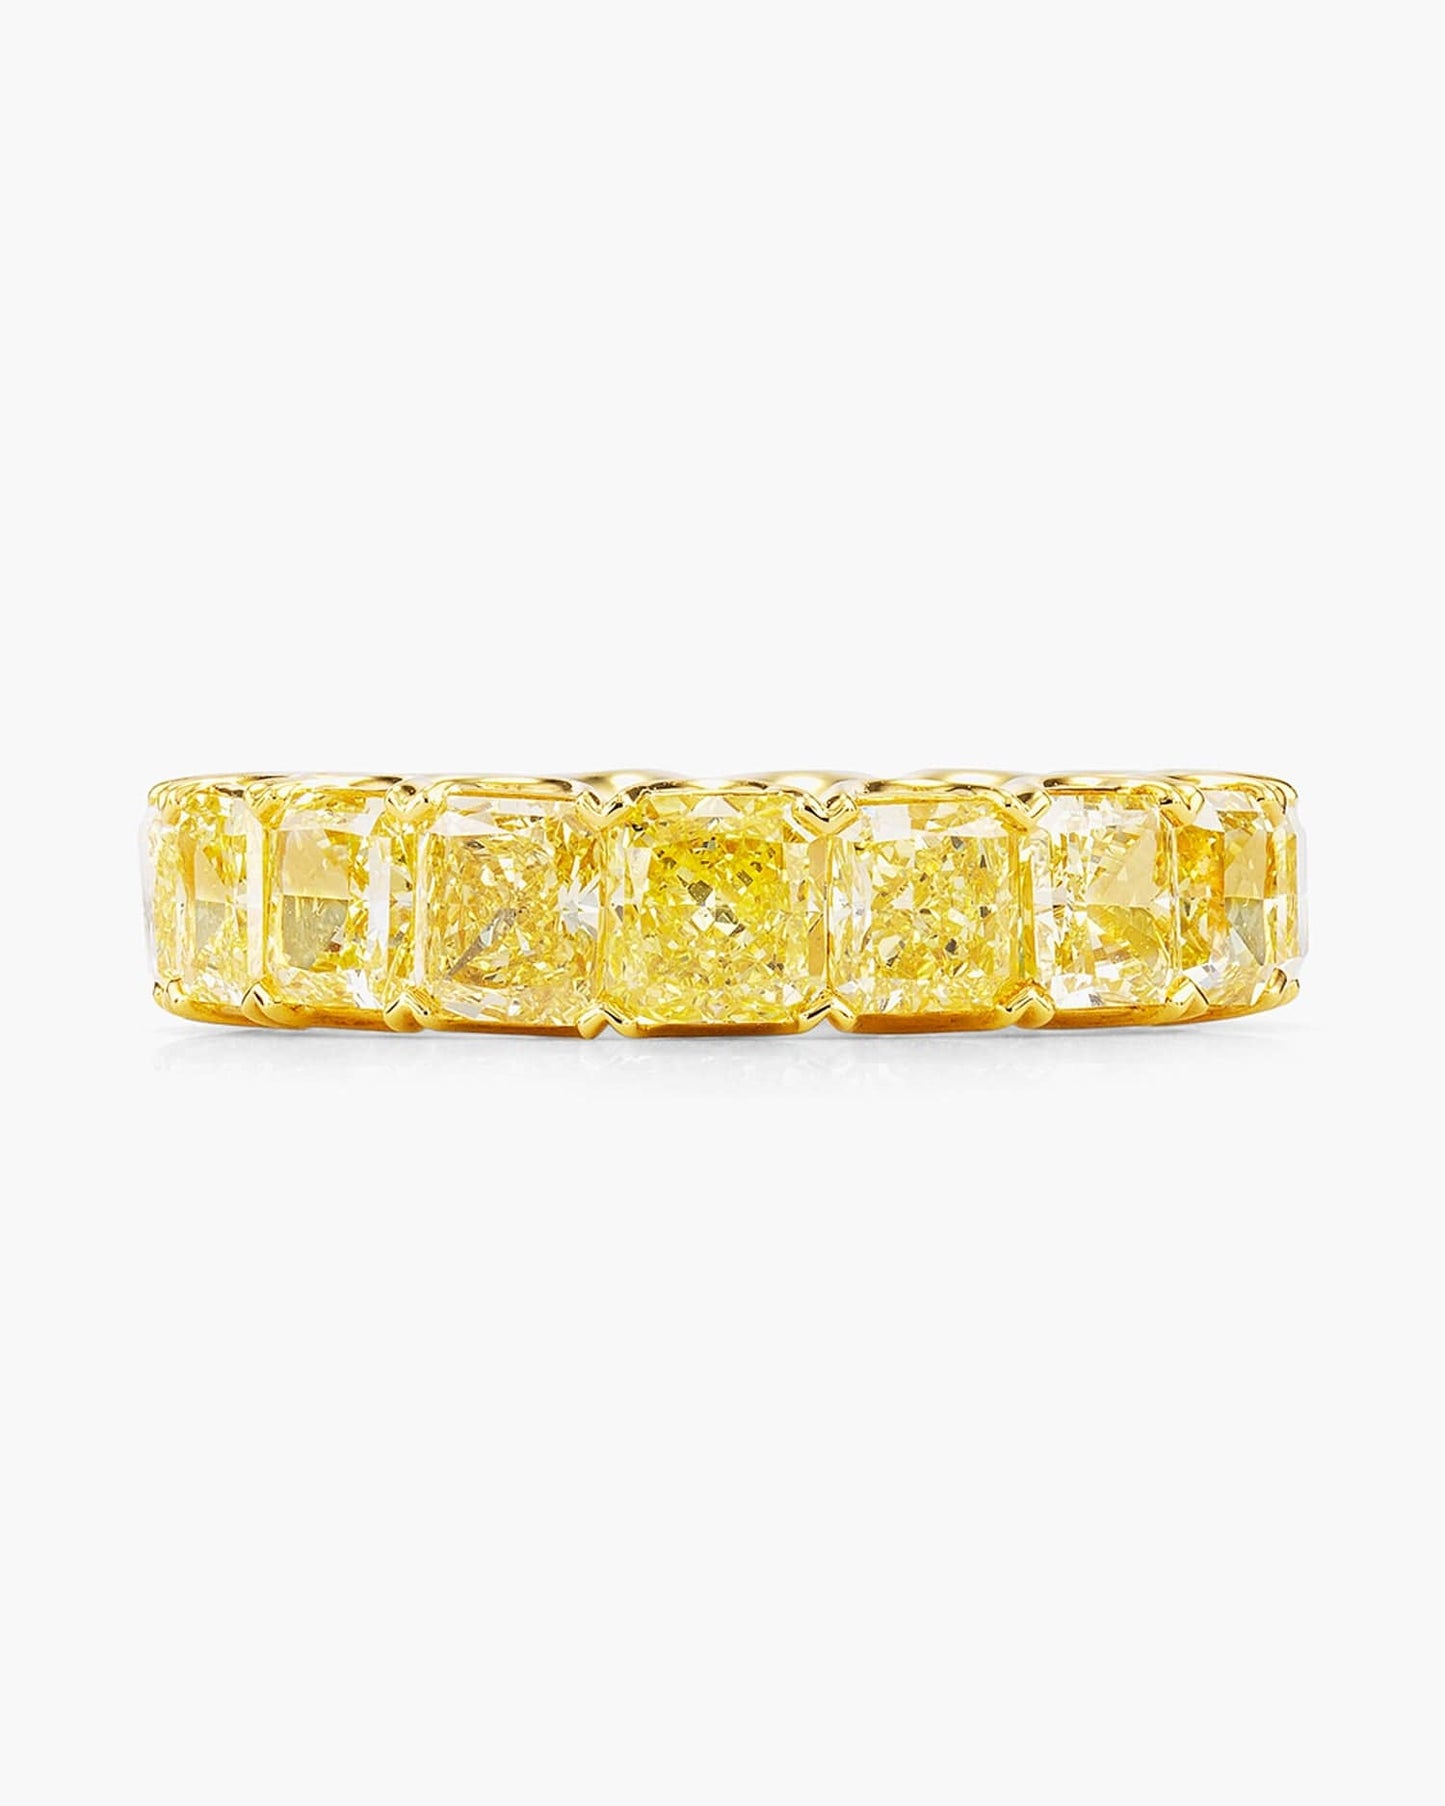 Radiant Cut Fancy Intense Yellow Diamond Eternity Ring (0.40 carat)